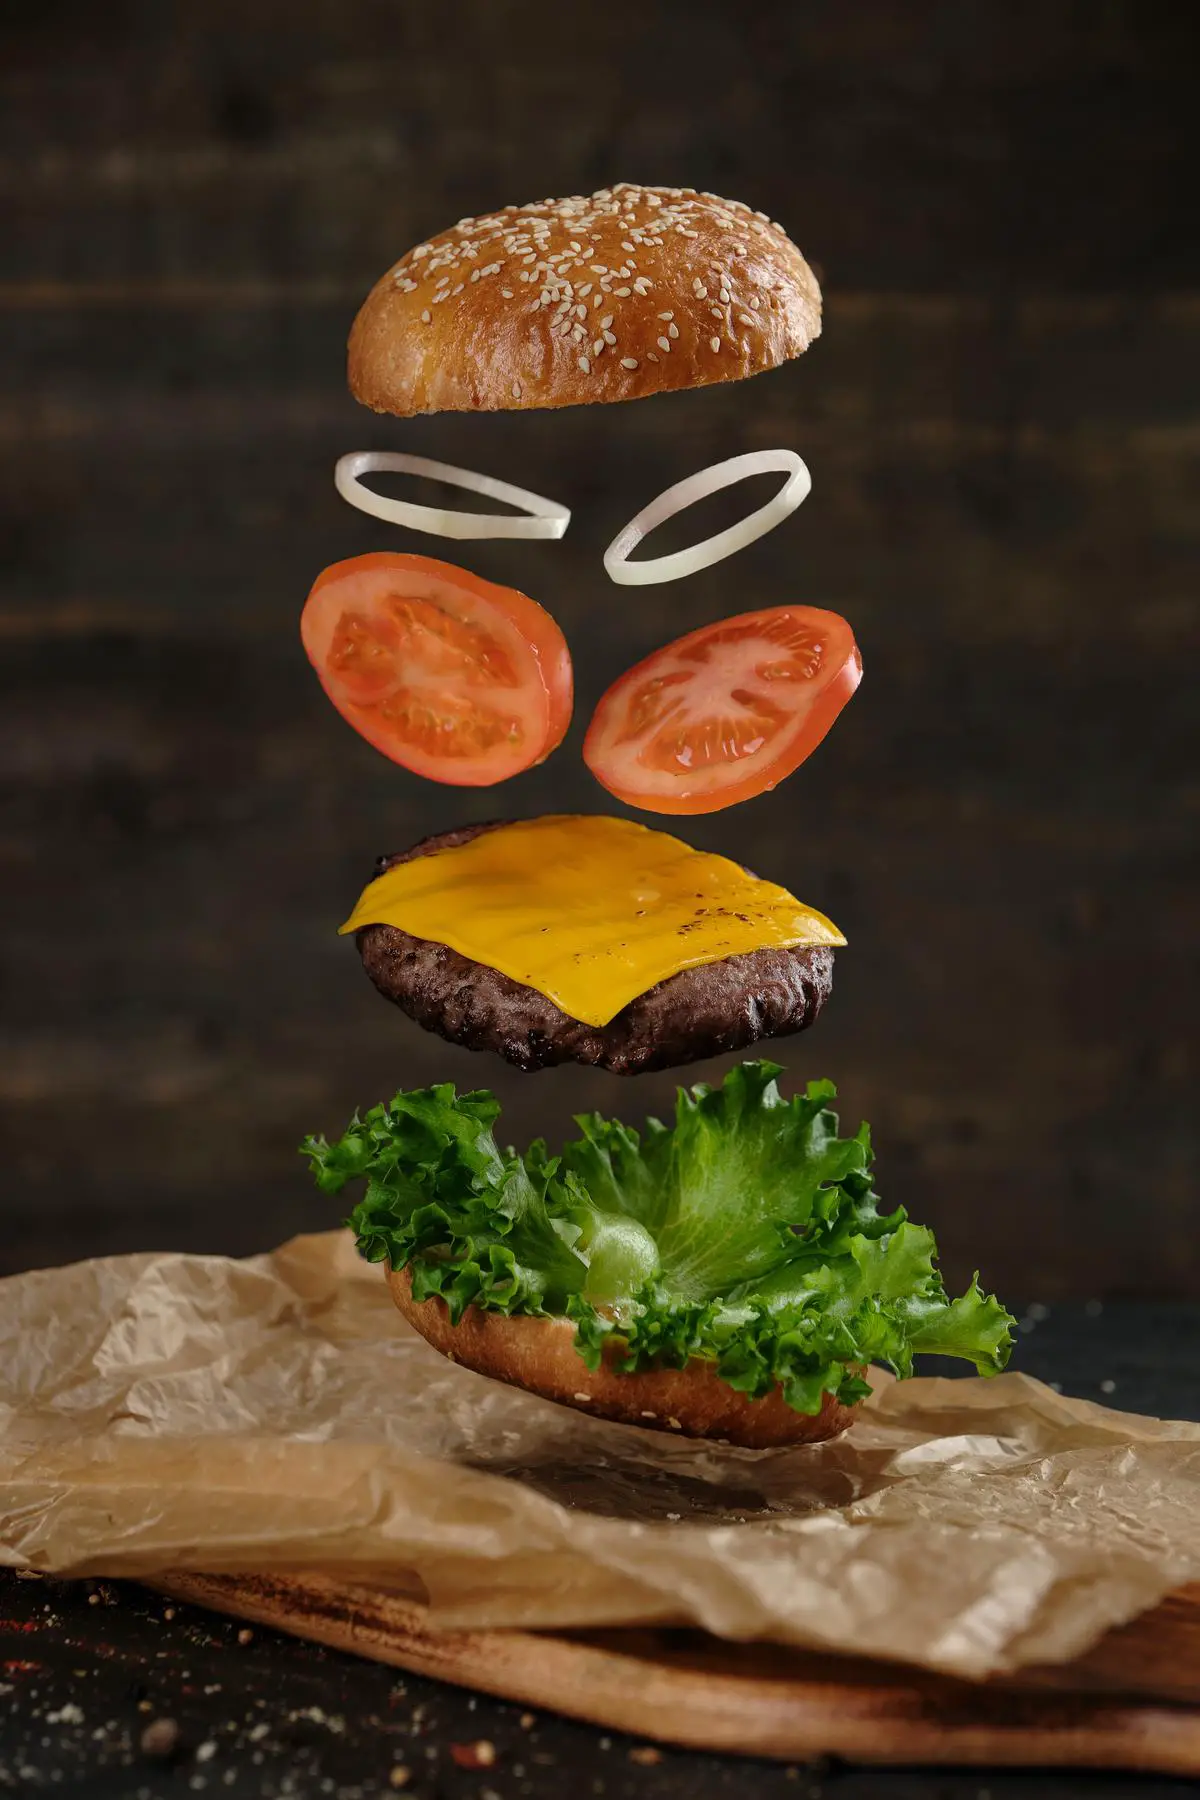 McDonald's Israel promoting the Big America series.